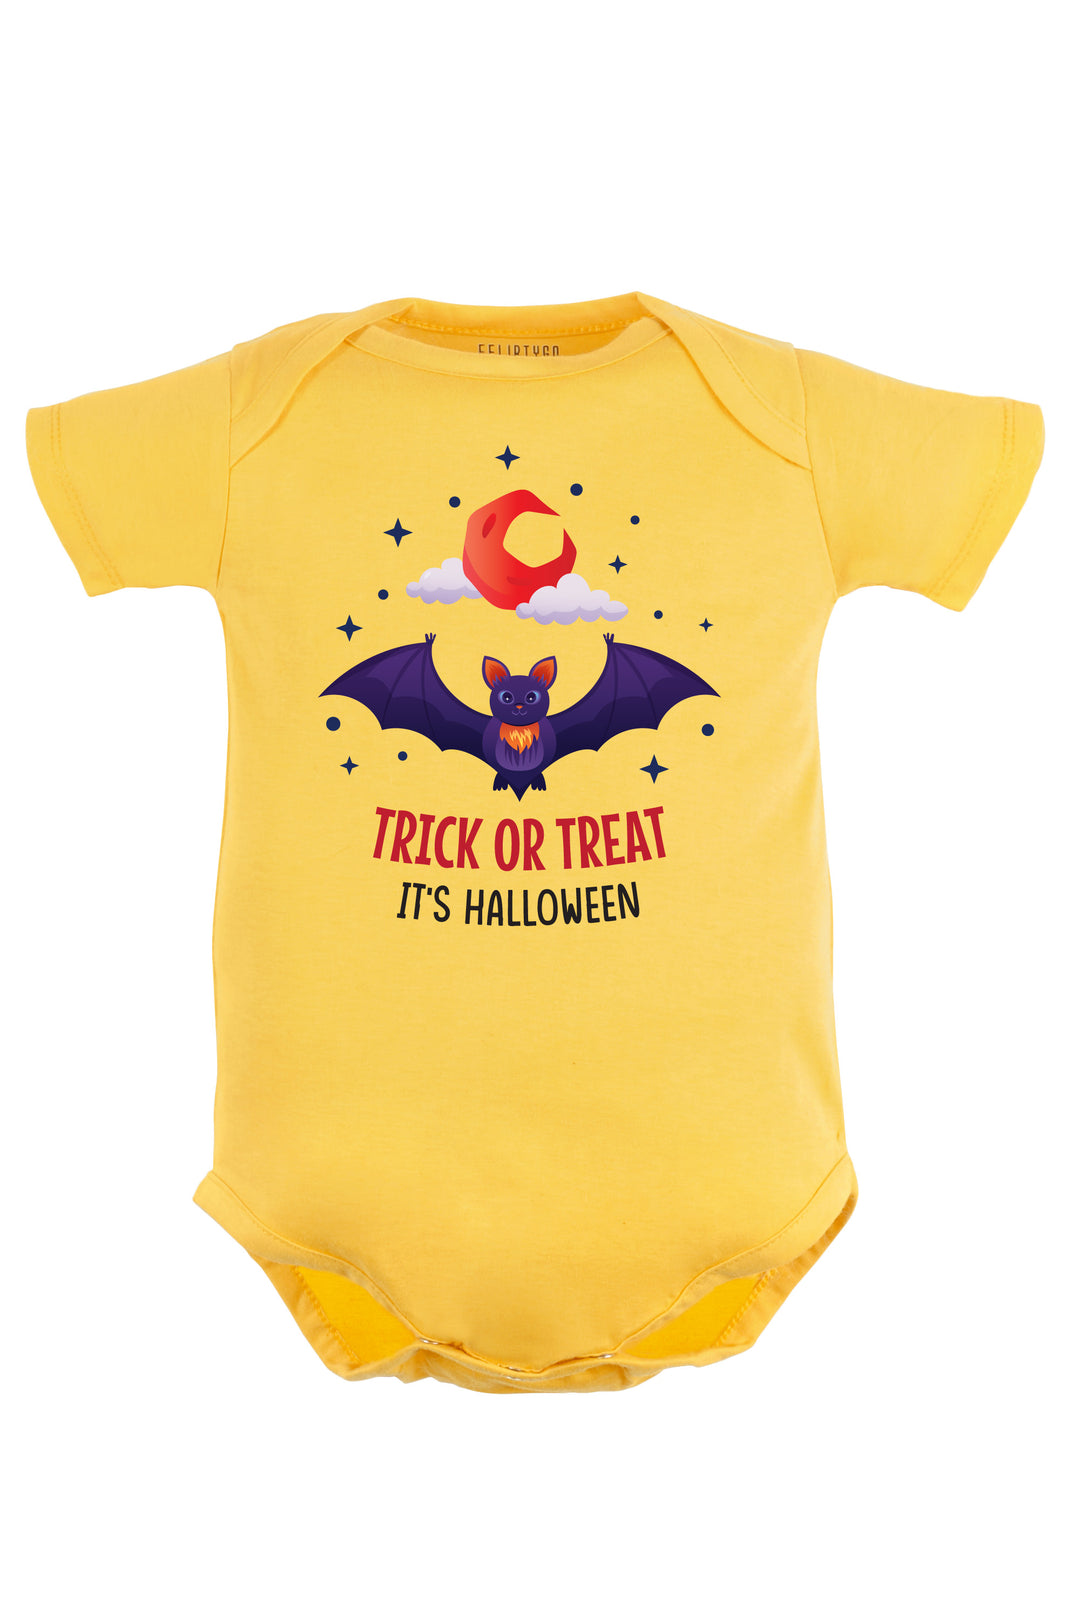 Trick Or Treat It's Halloween Baby Romper | Onesies